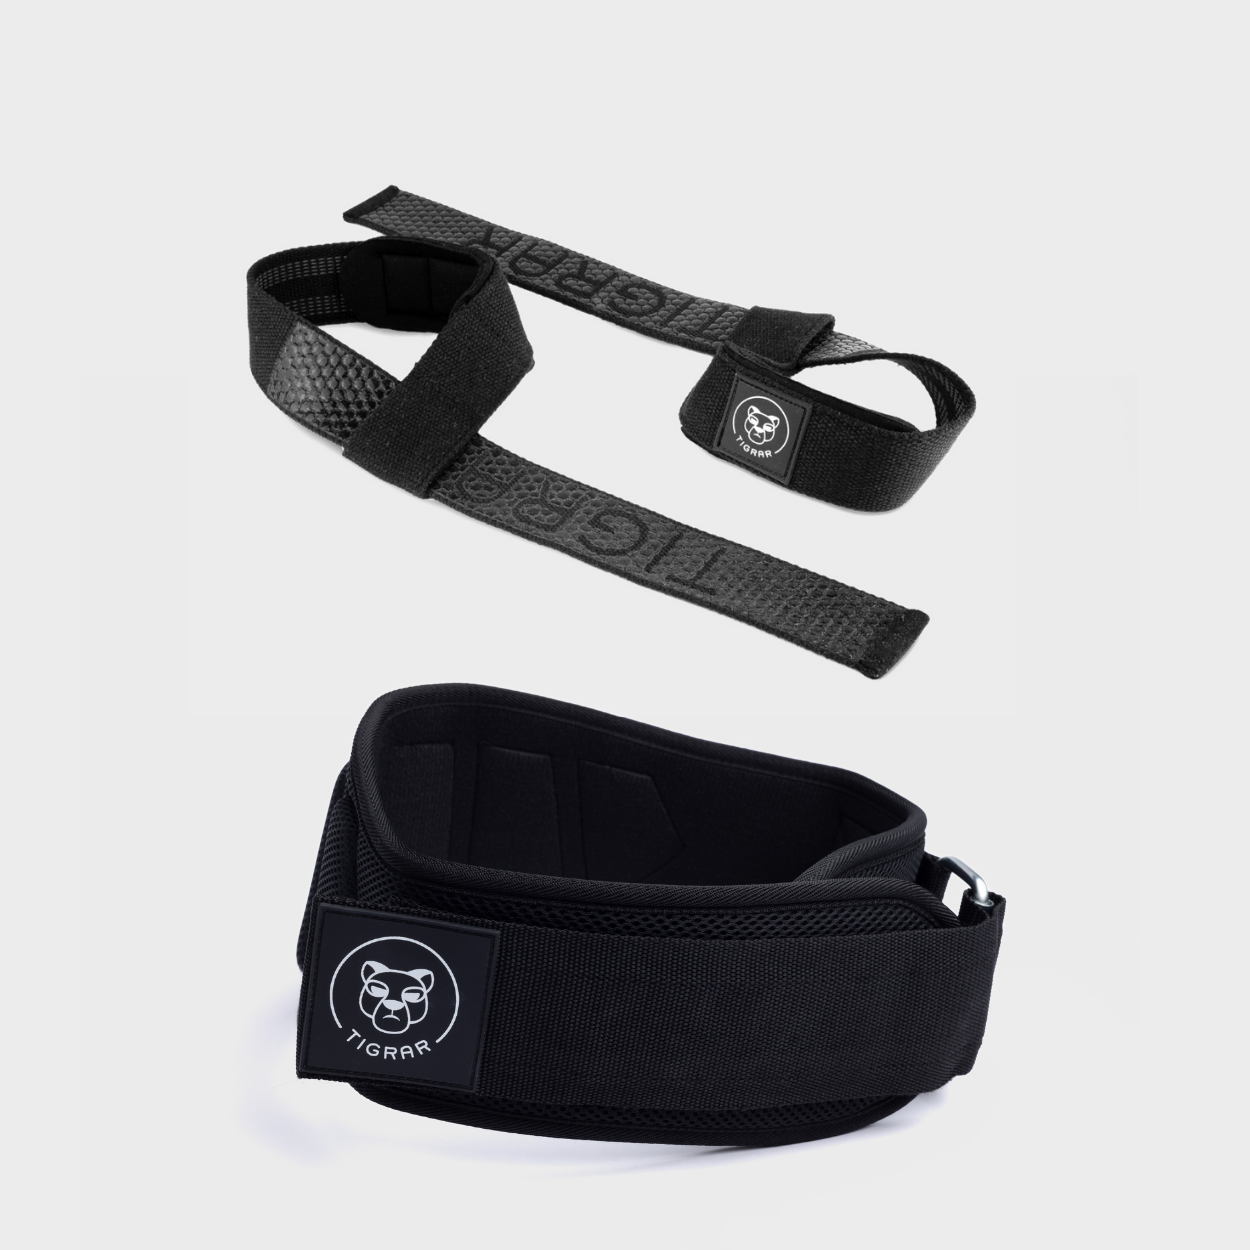 Tigrar lever powerlifting belt and black lifting straps